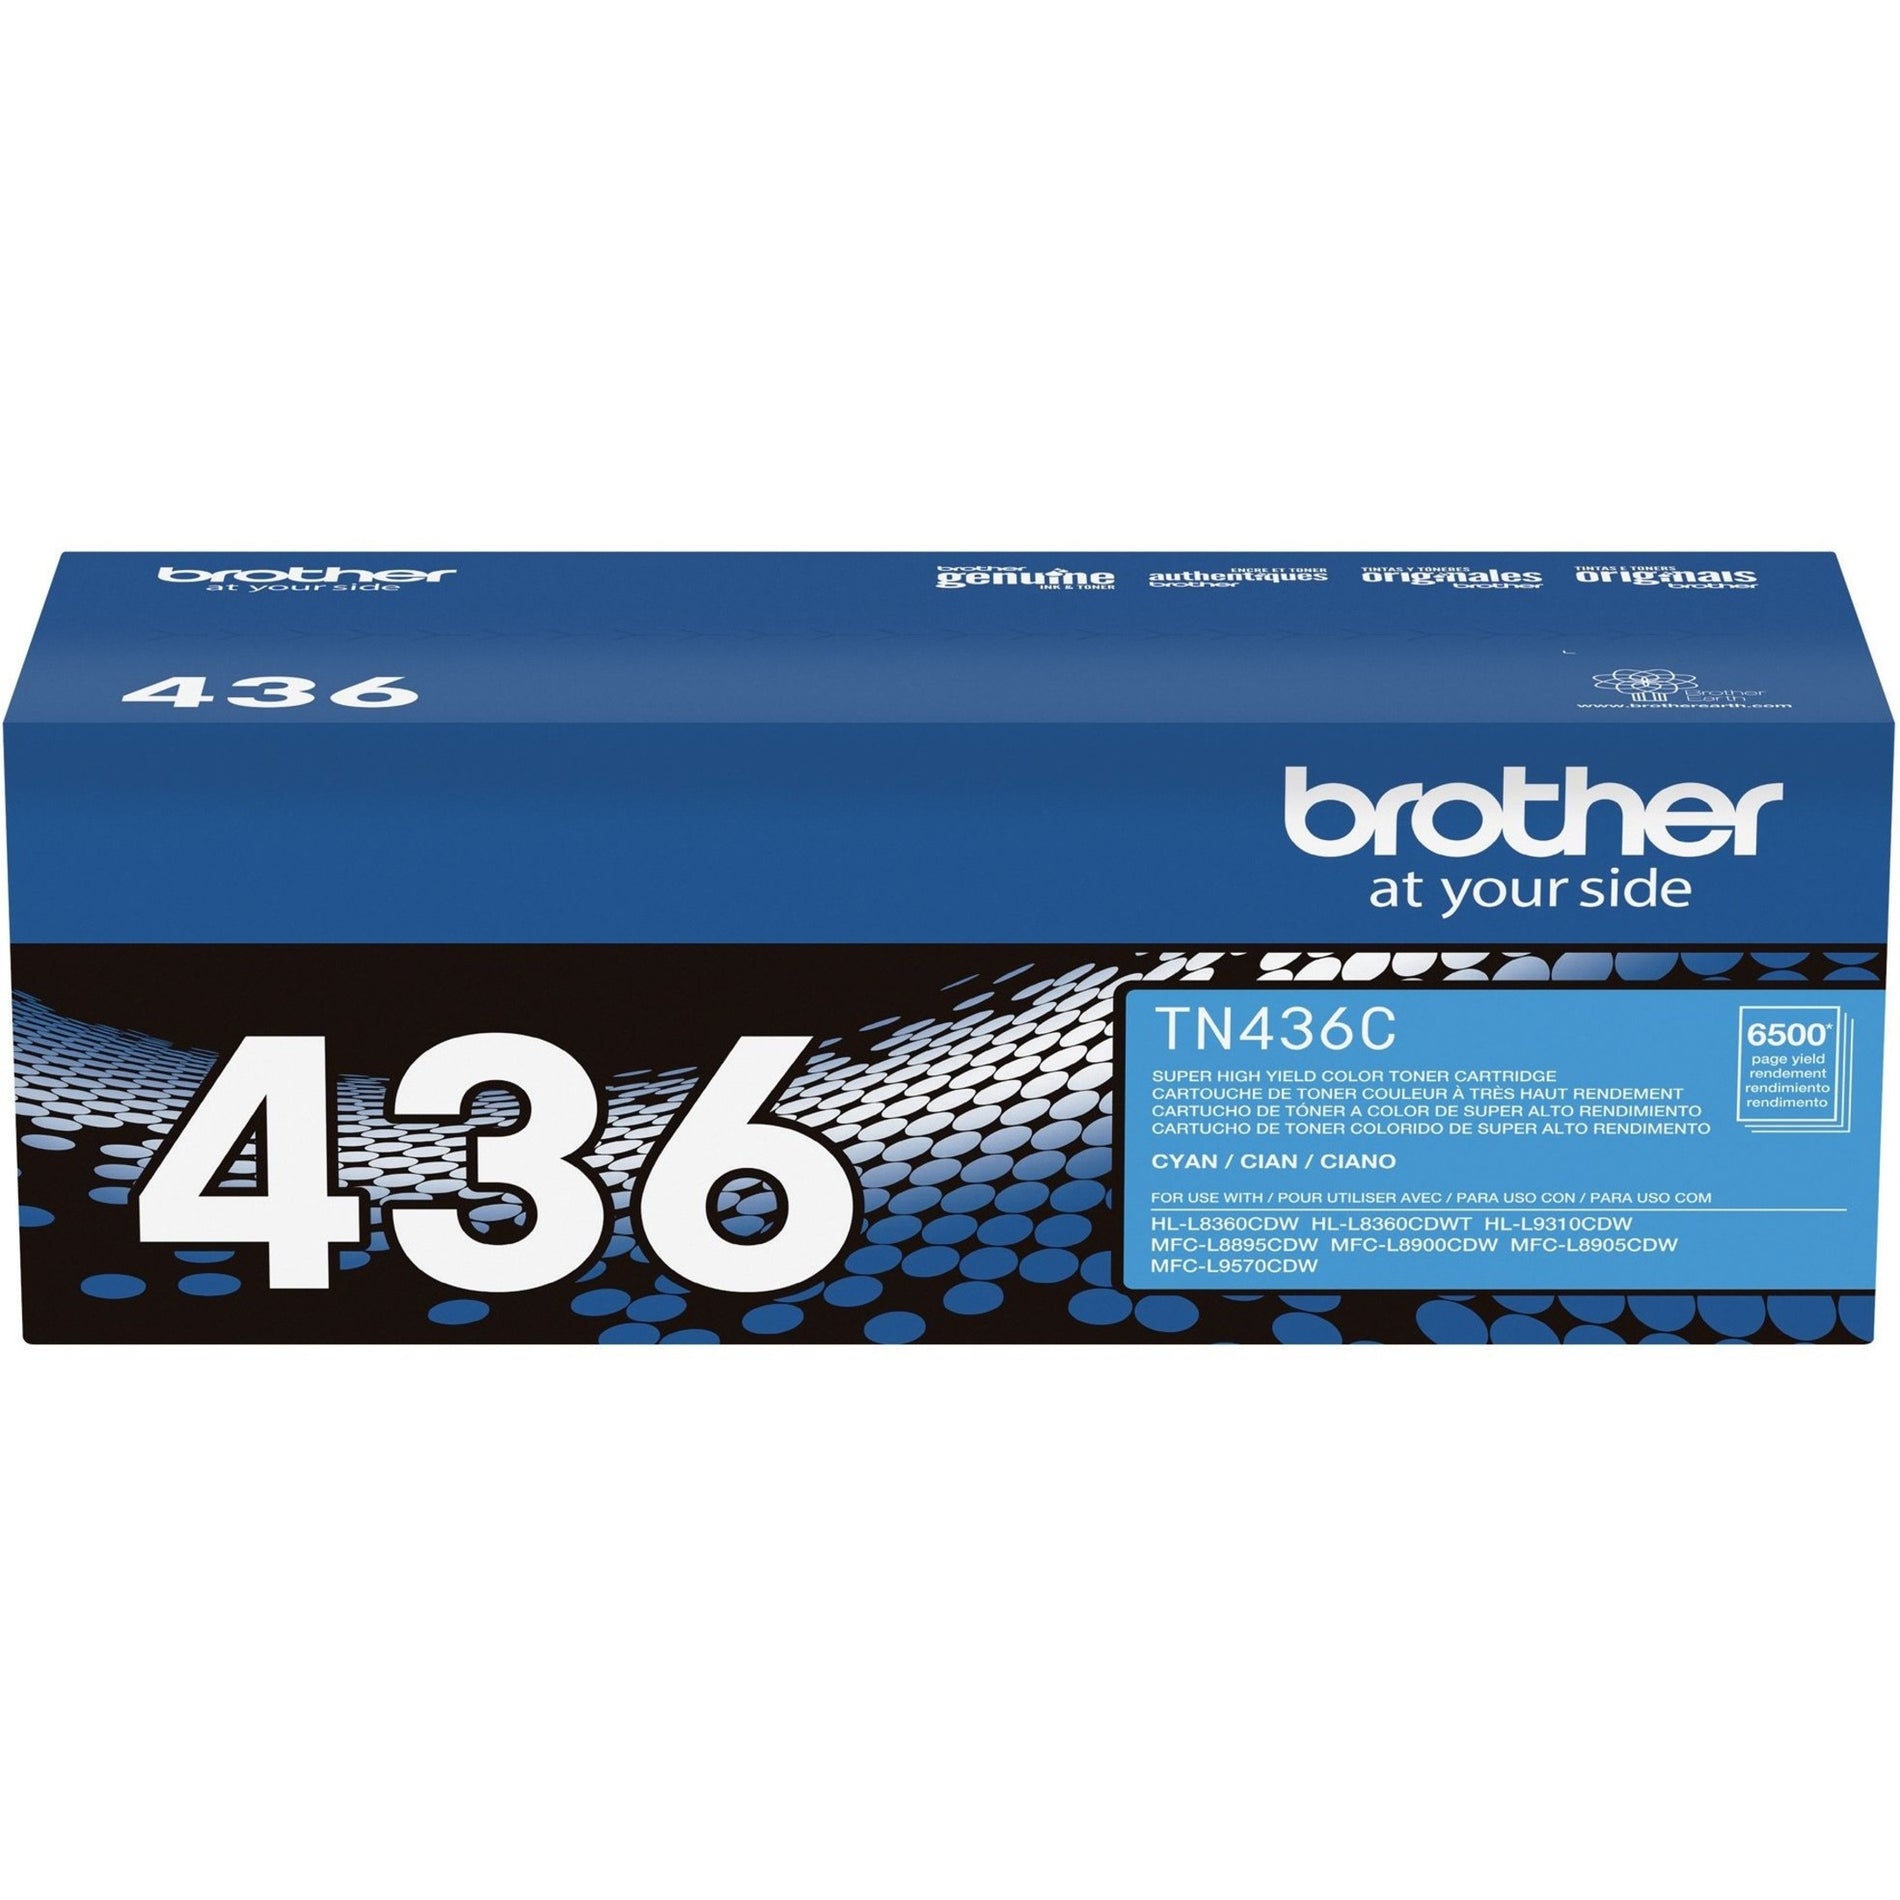 Brother TN436C 碳粉盒 - 青色，原装激光碳粉盒 - 6500页 品牌名称：兄弟 将可翻译的词语翻译成中文（普通话）的值。